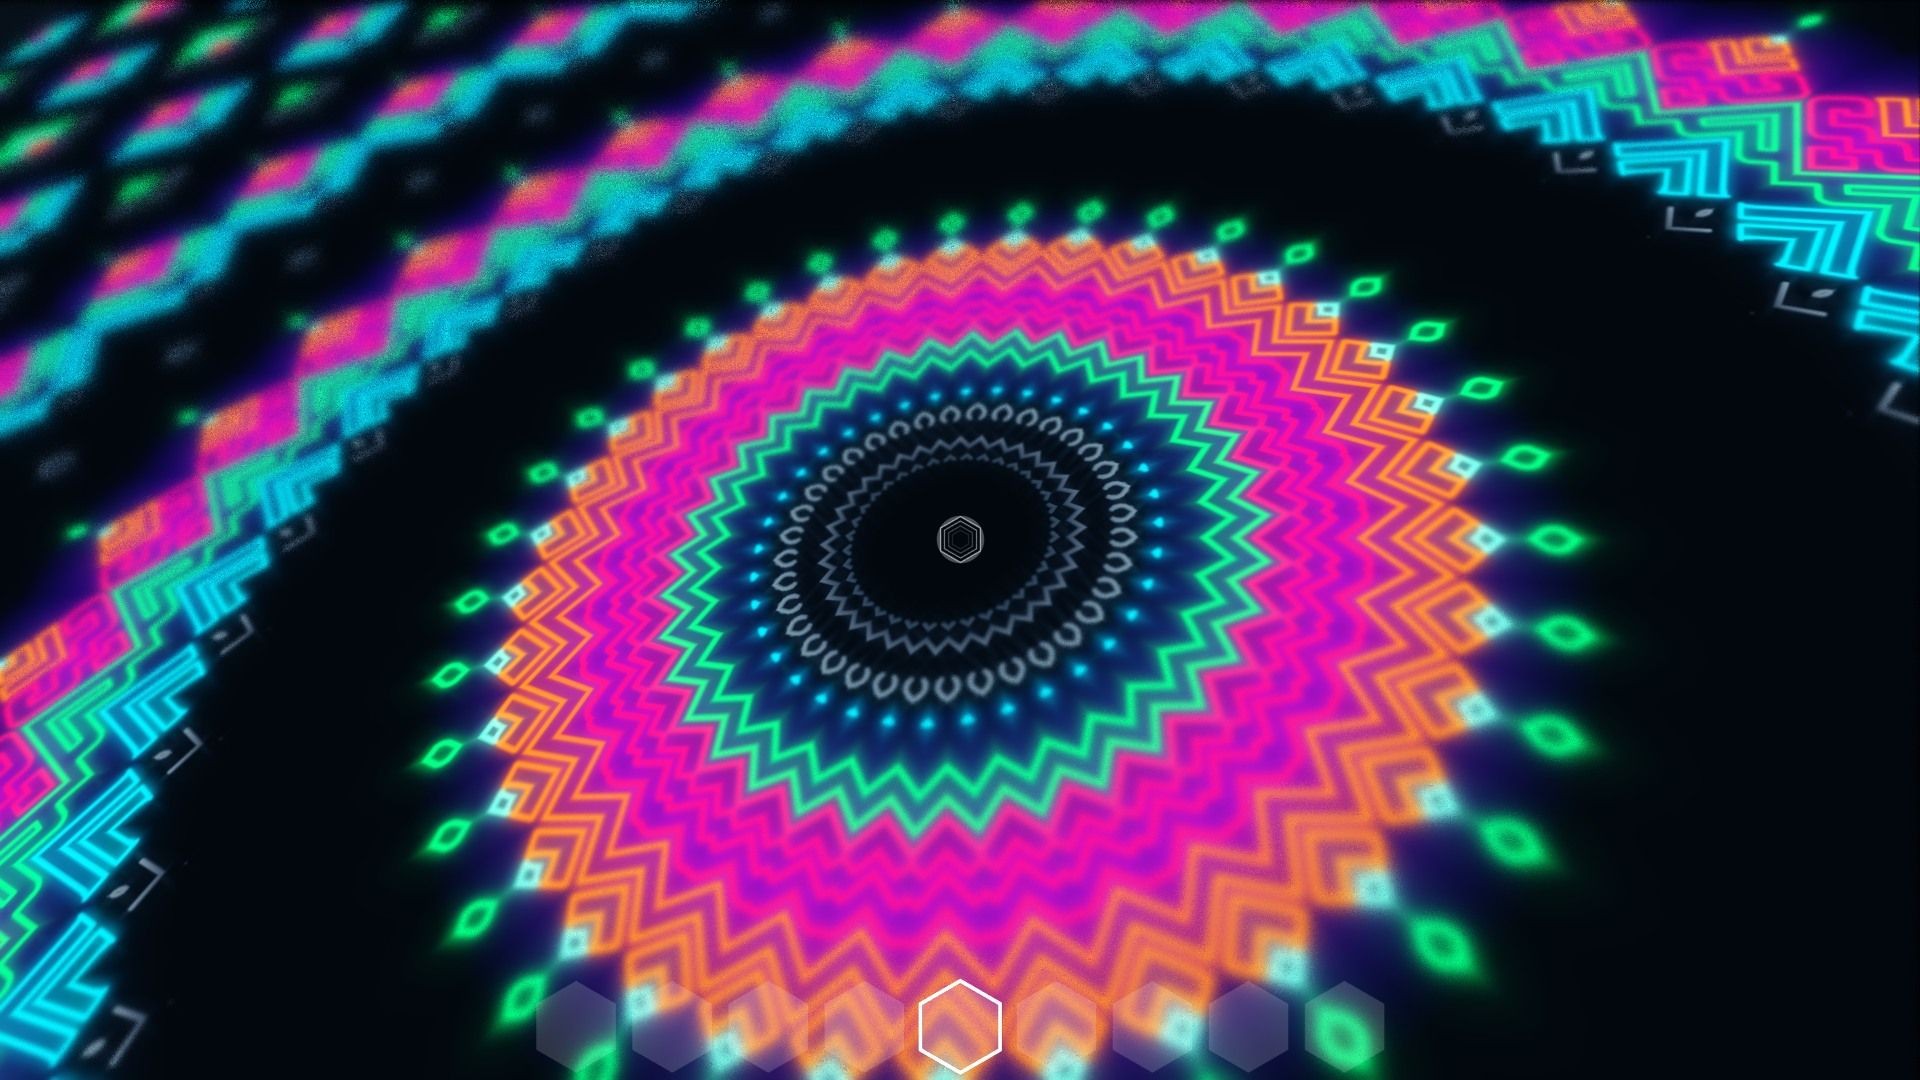 HD Acid Trip Wallpaper Amazing Image 1080p Smart Phone Background